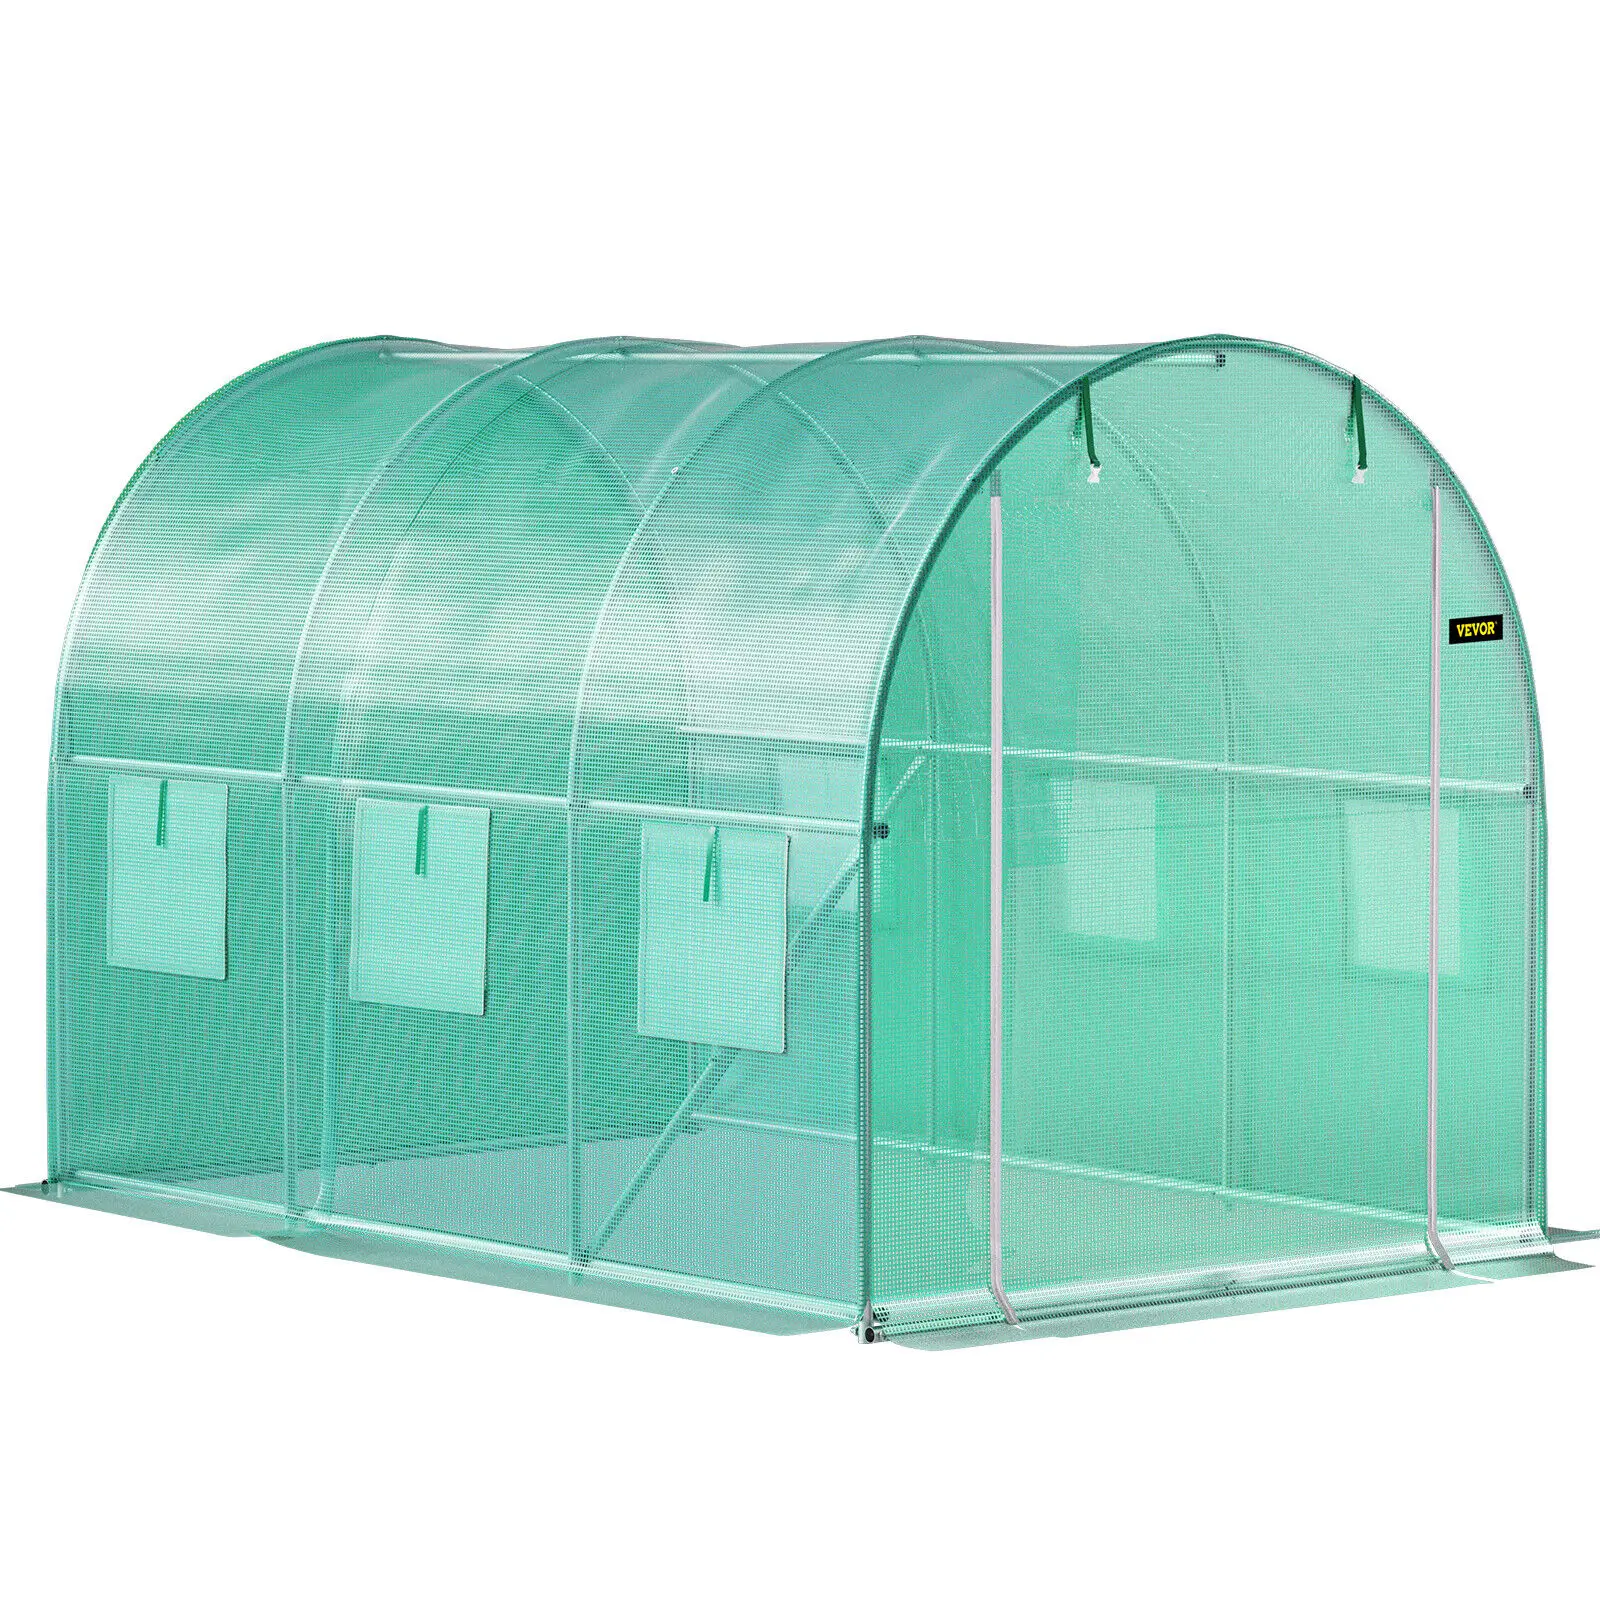 Walk-in Tunnel Greenhouse Galvanized Frame Waterproof 9.8x6.6x6.6 ft